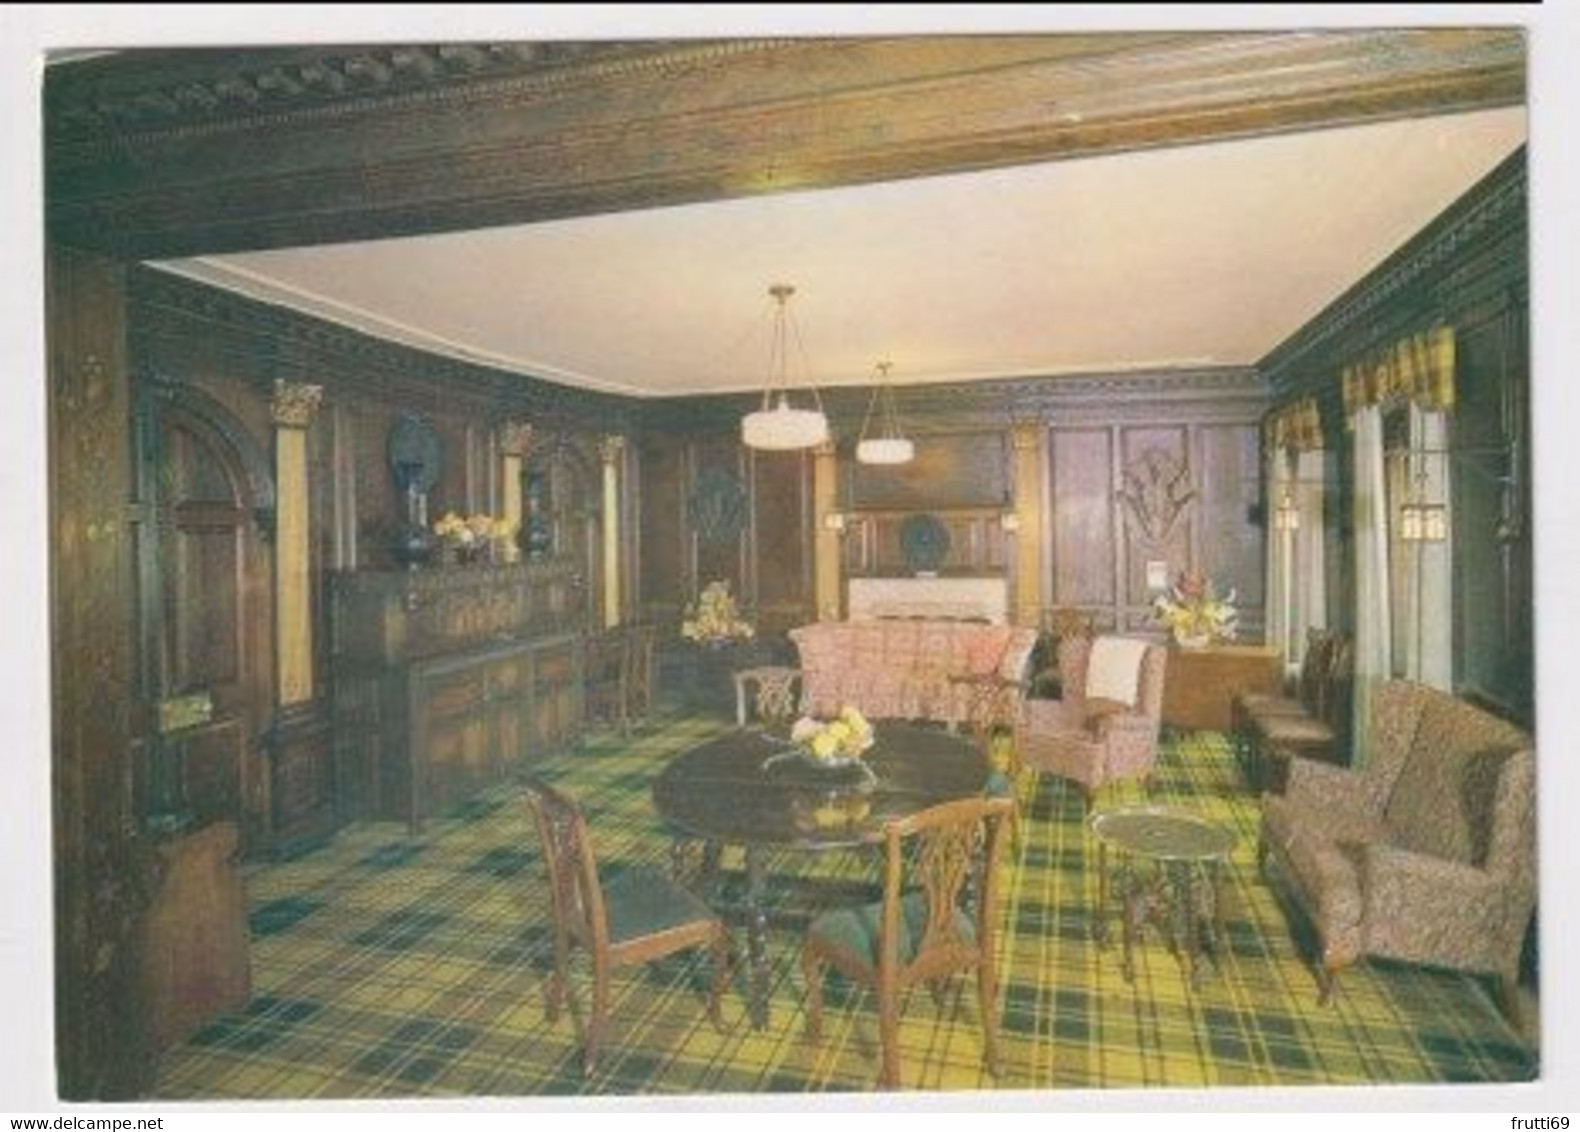 AK 043022 SCOTLAND - Dumfries - County Hotel - Prince Charlie's Room - Dumfriesshire